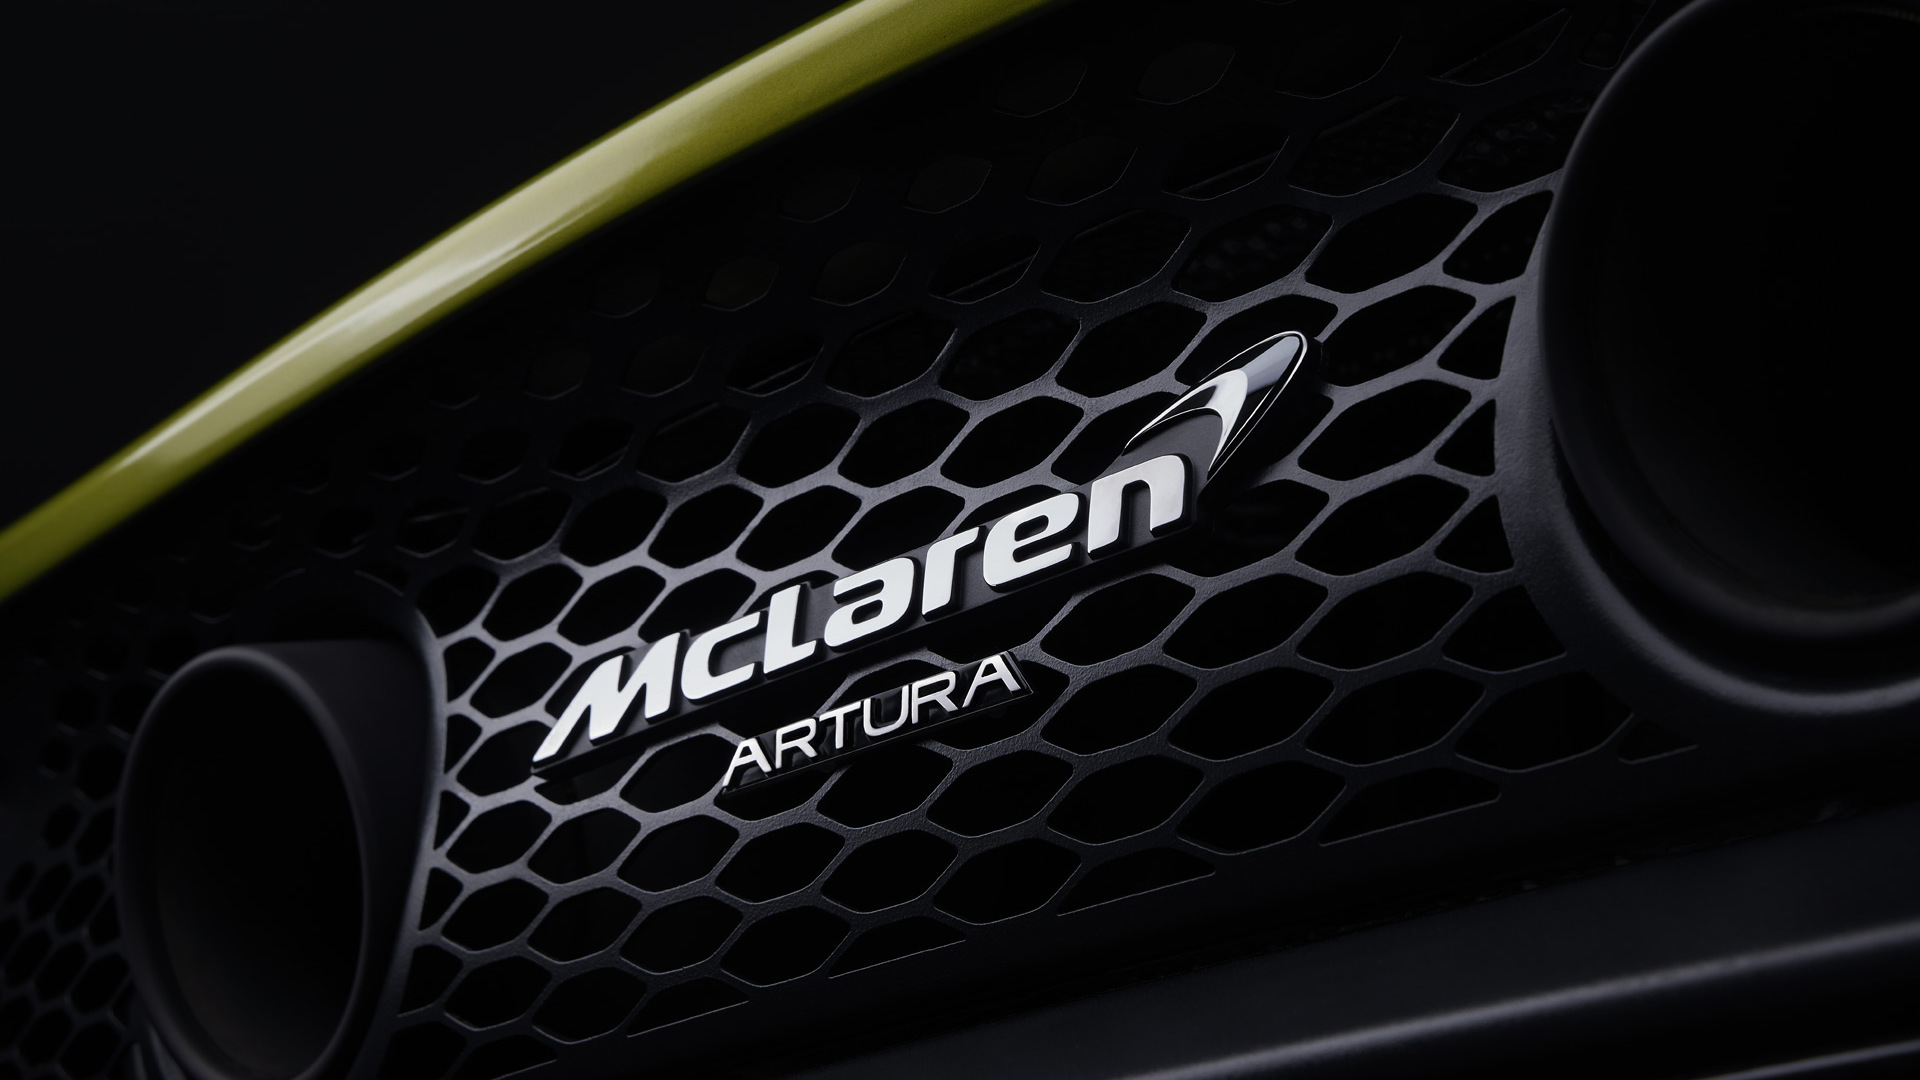 Teaser for McLaren Artura due in early 2021